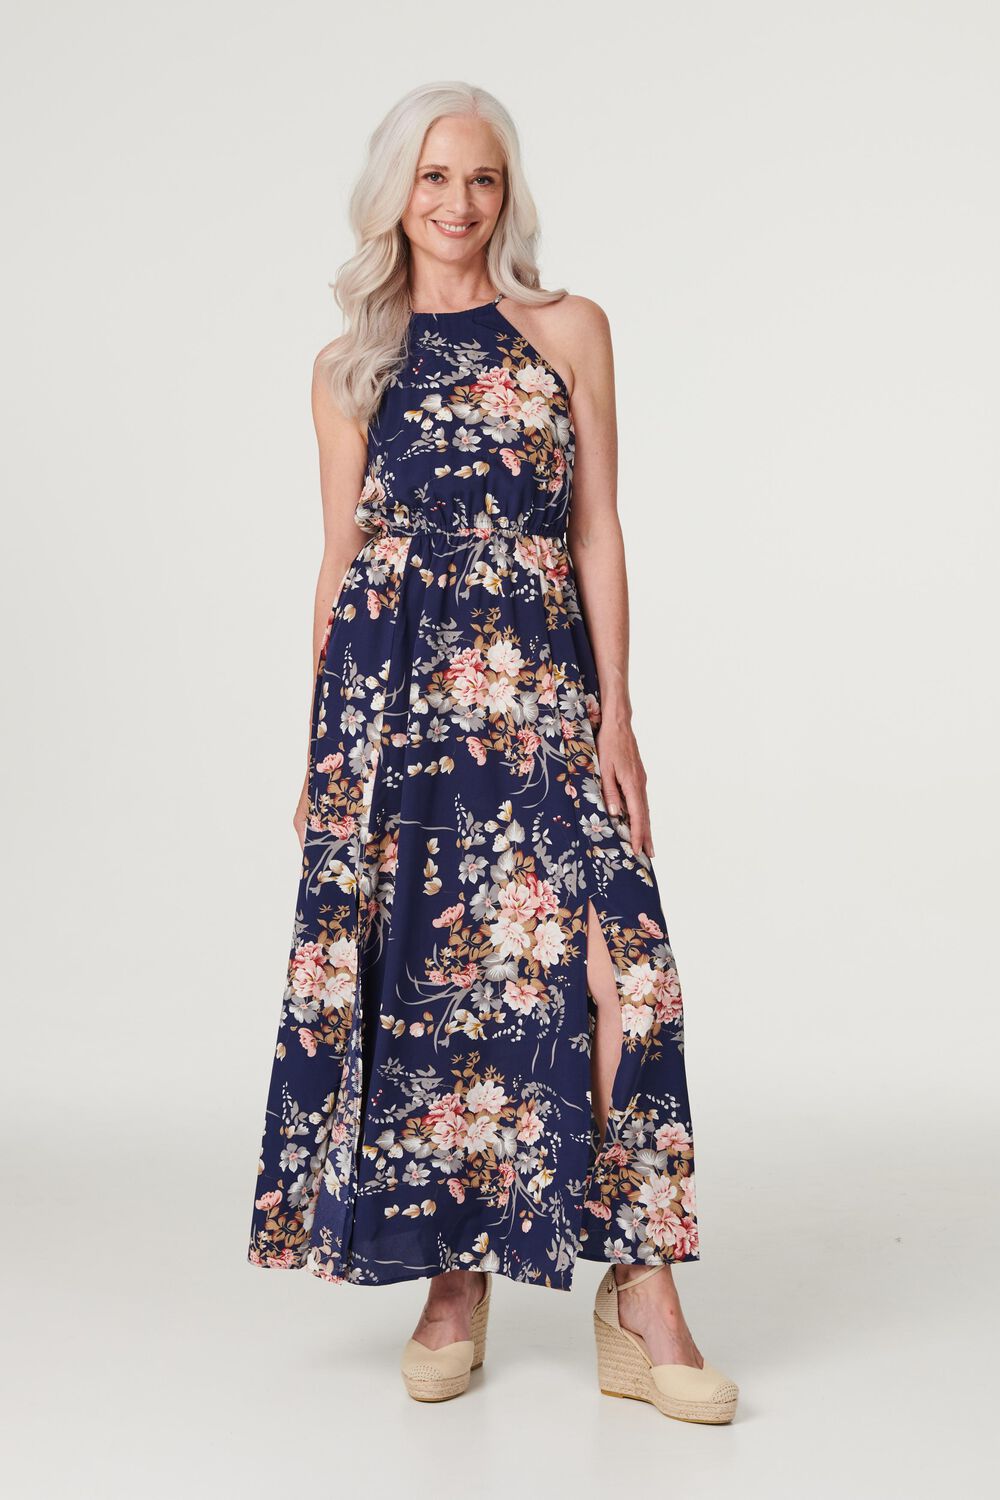 Izabel London Navy - Floral Halter Neck Maxi Dress, Size: 12